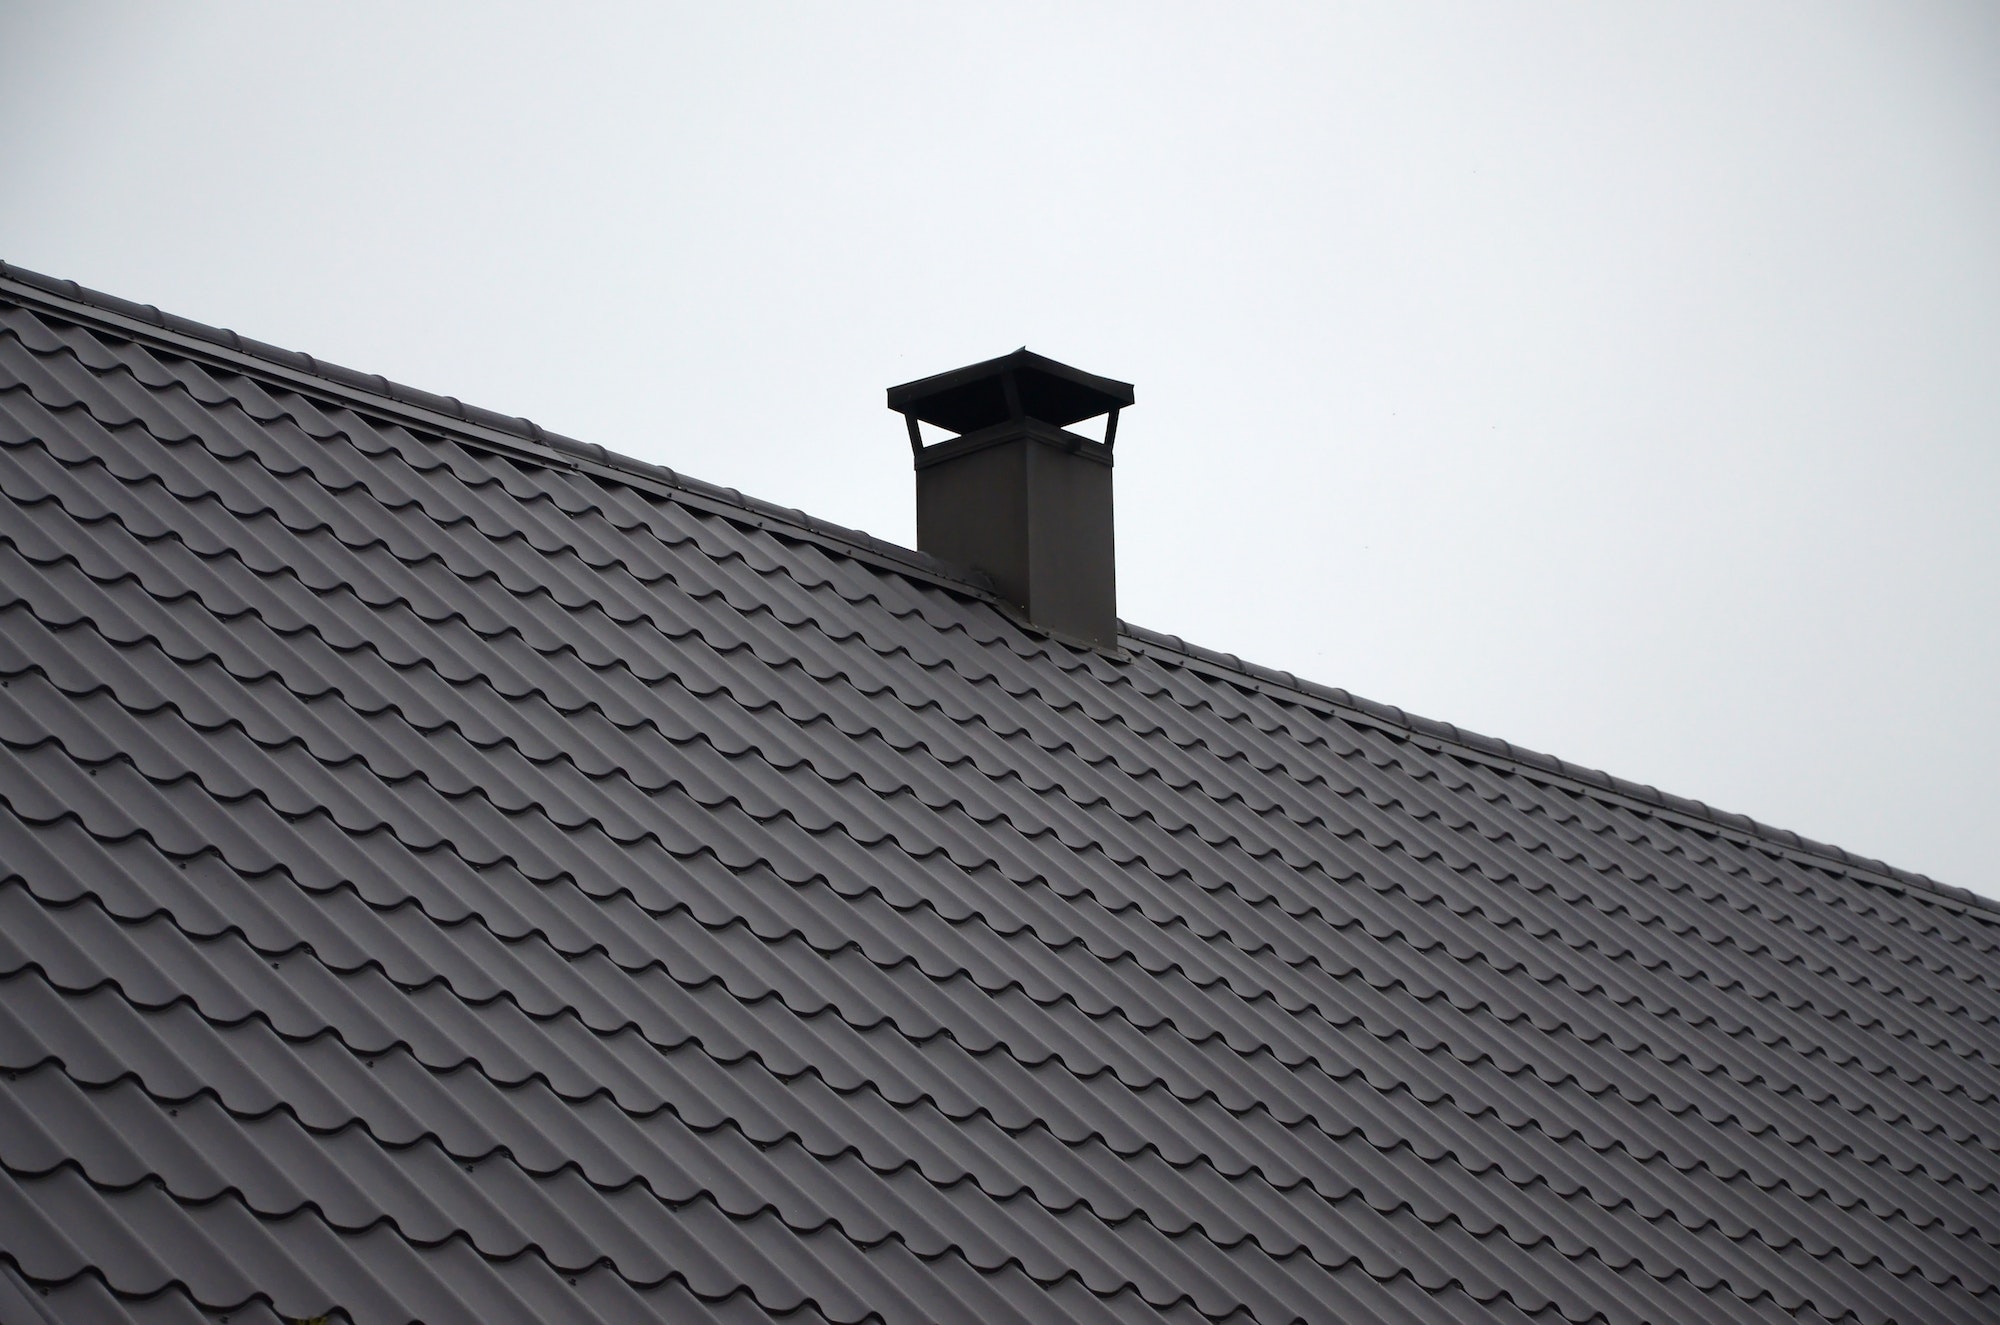 Modern brown roof made of painted metal. Corrugated metal roof and metal roofing industry concept